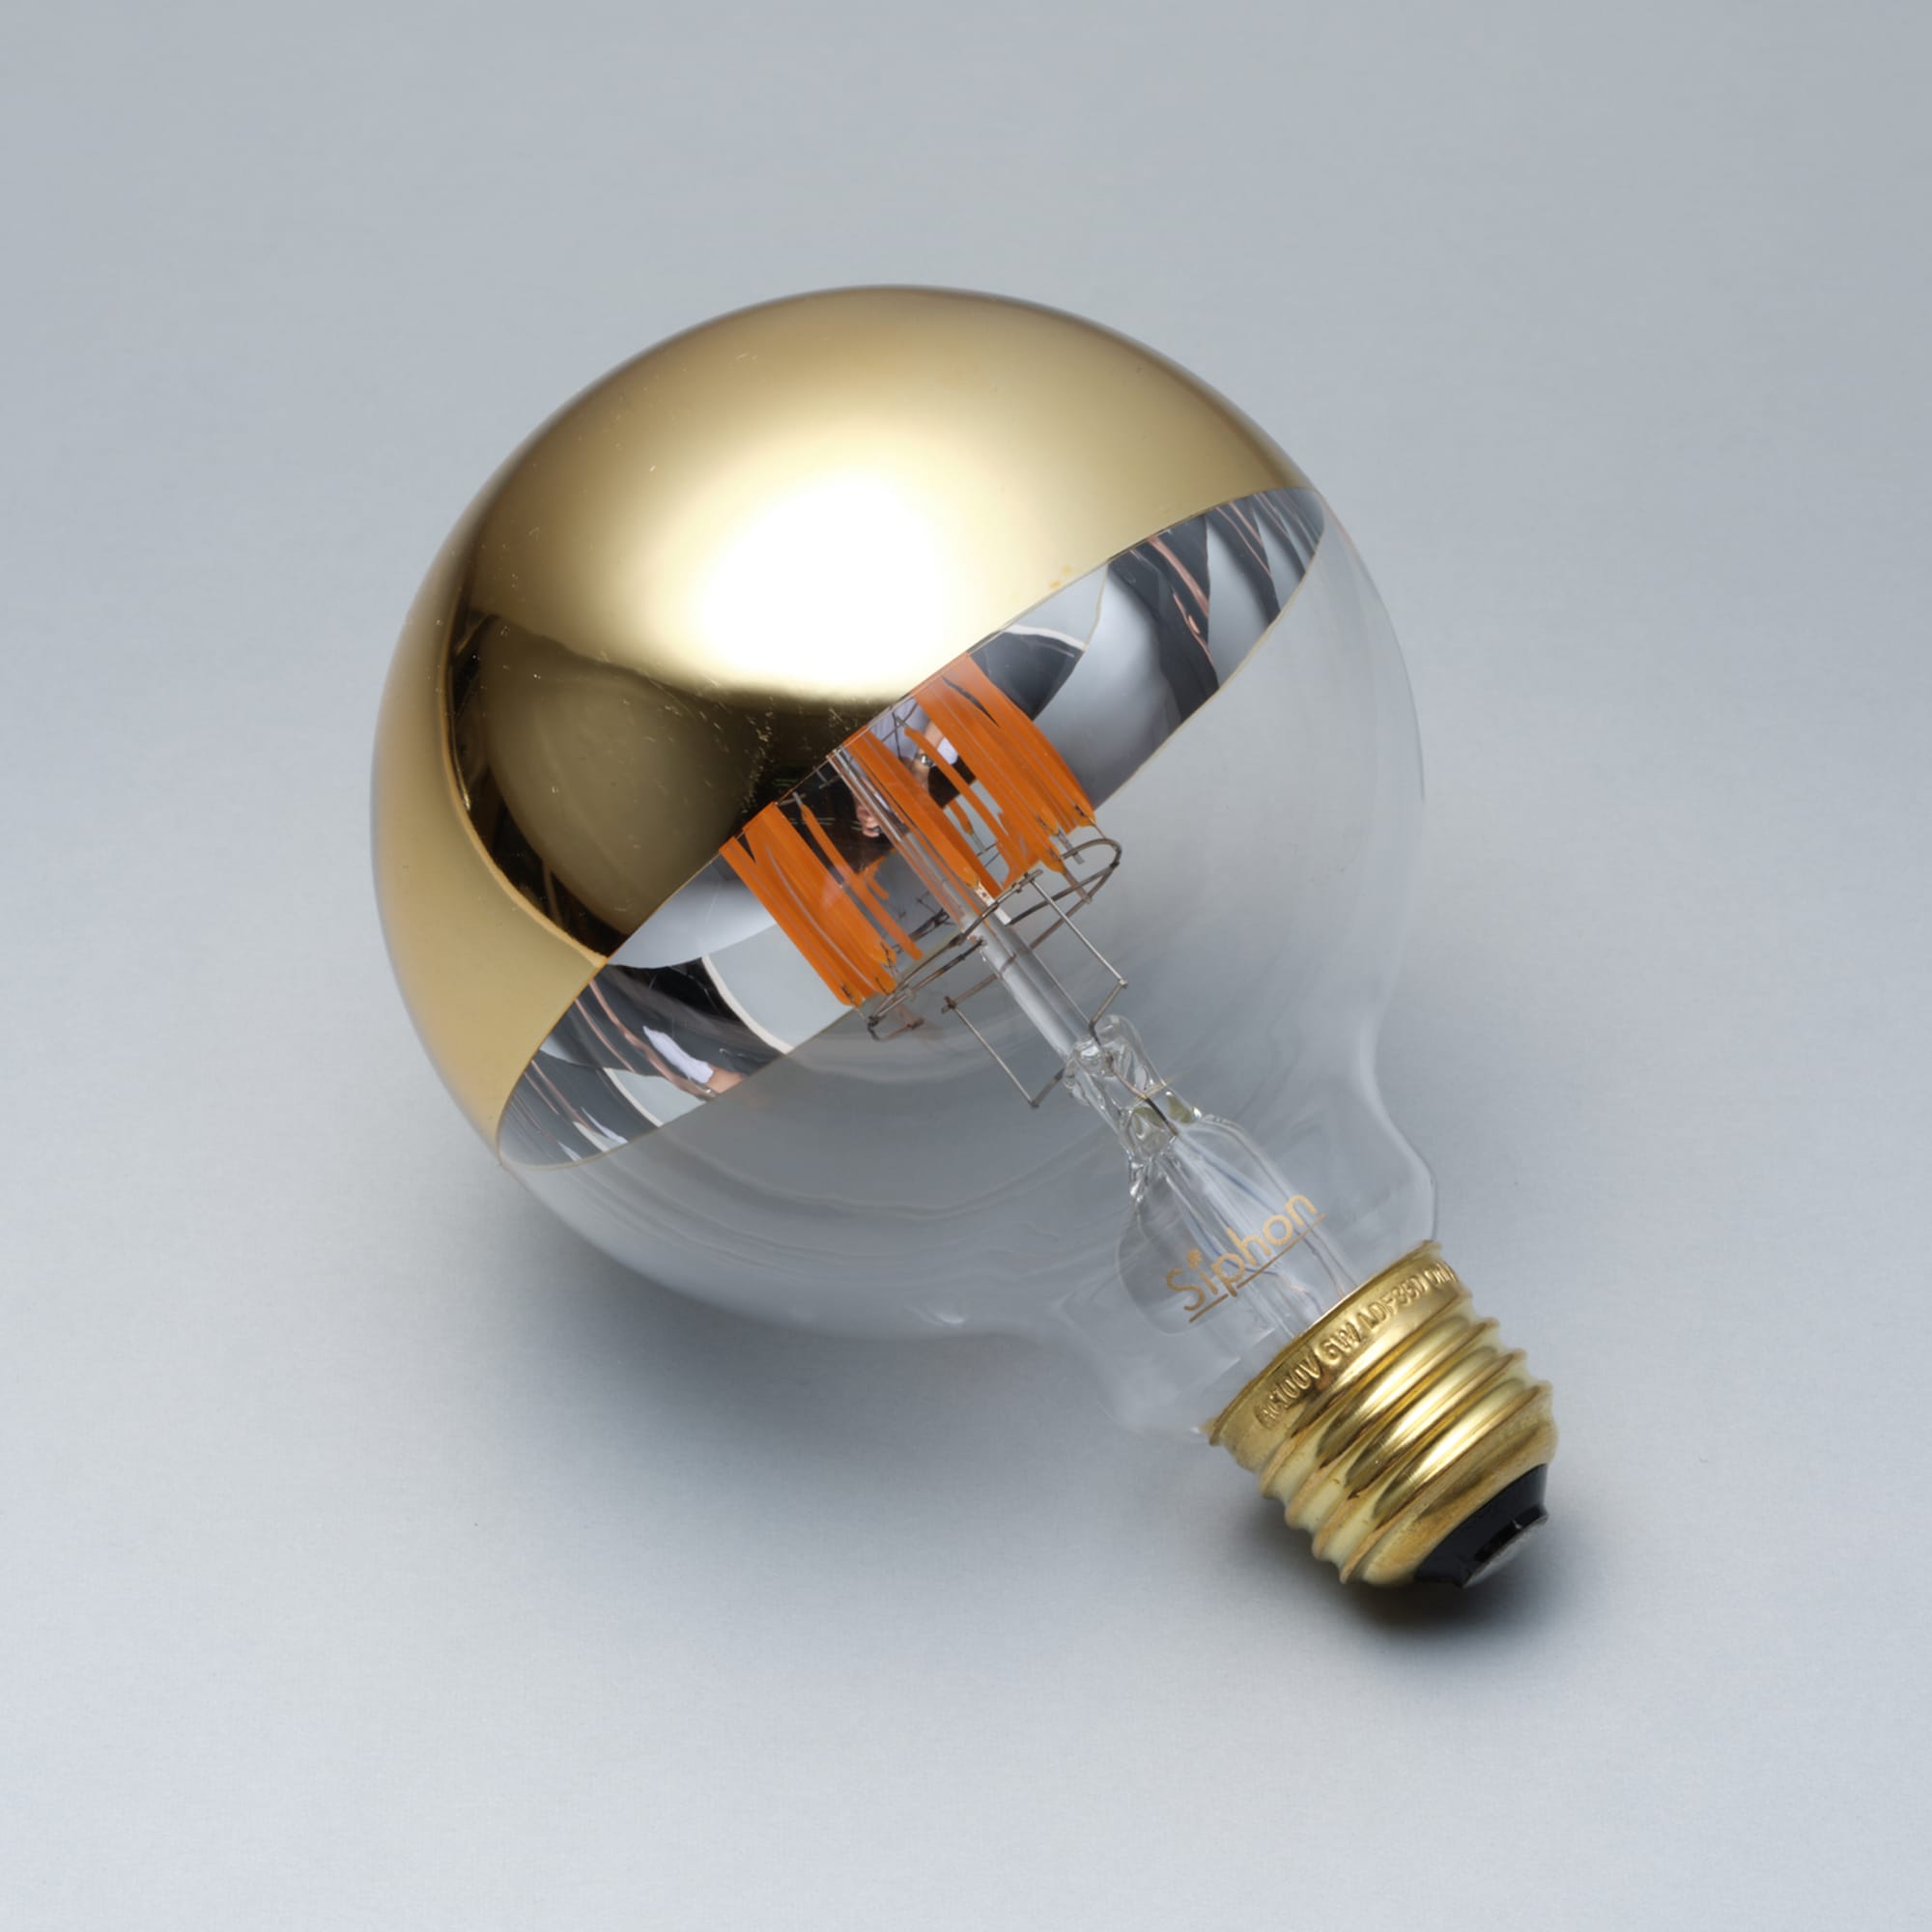 ミラーLED電球 φ95(E26)50W相当 ゴールド 2200K電球色 LT-BB007-07-G141